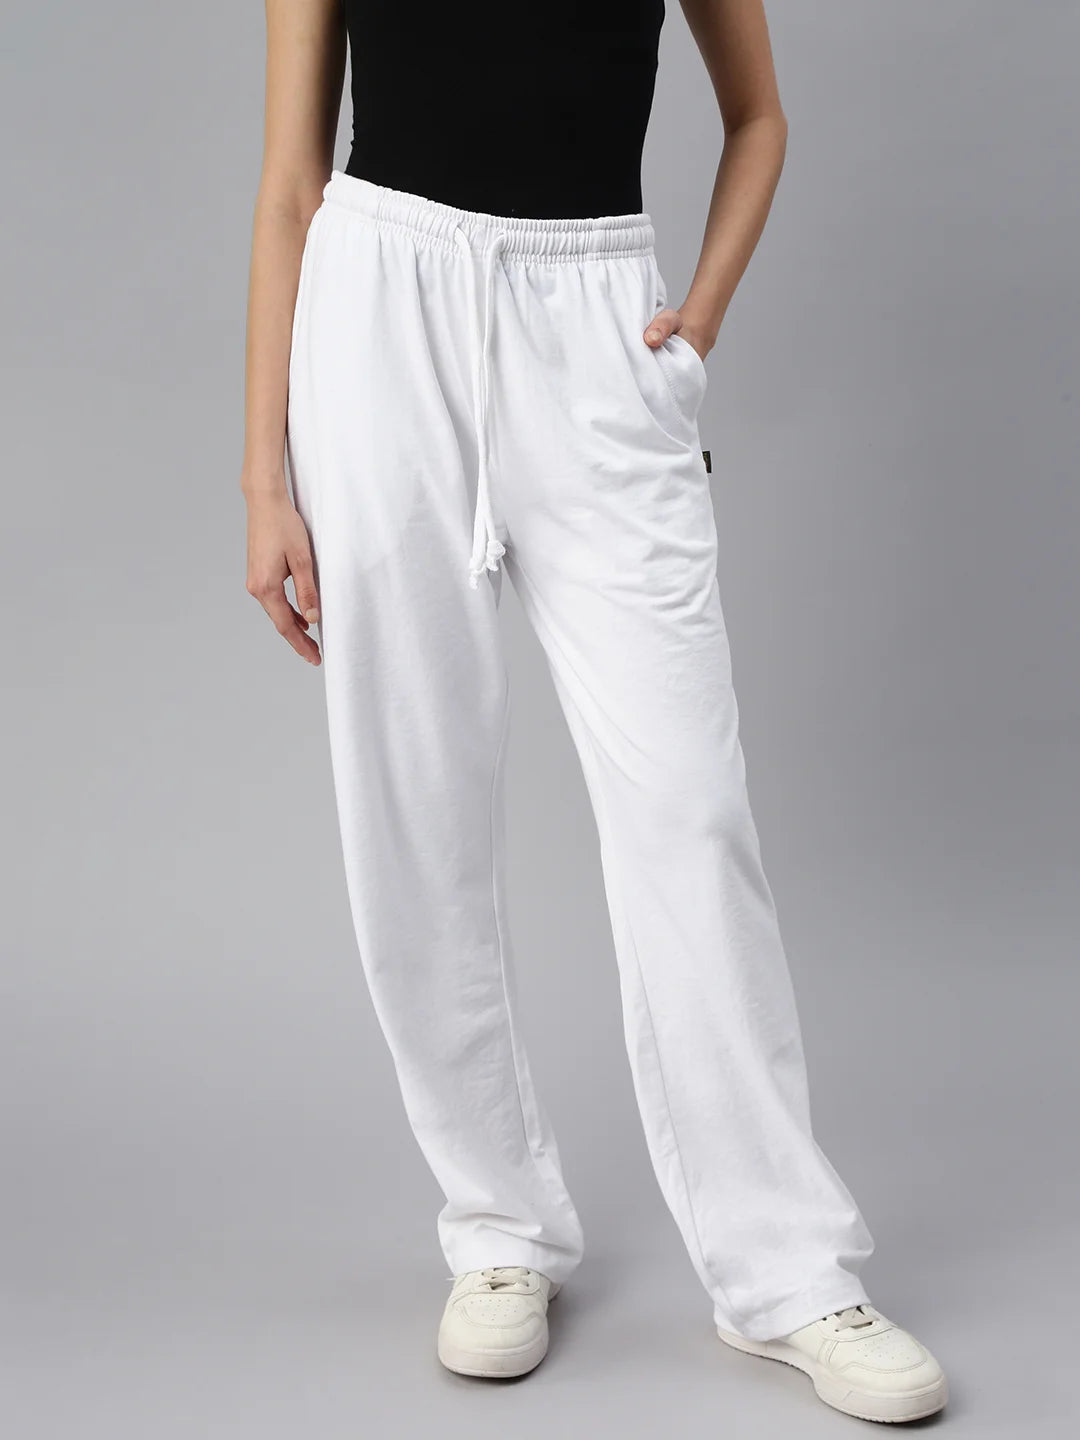 unisexe-denver-coton-polyester-sweat-pantalon-blanc-avant